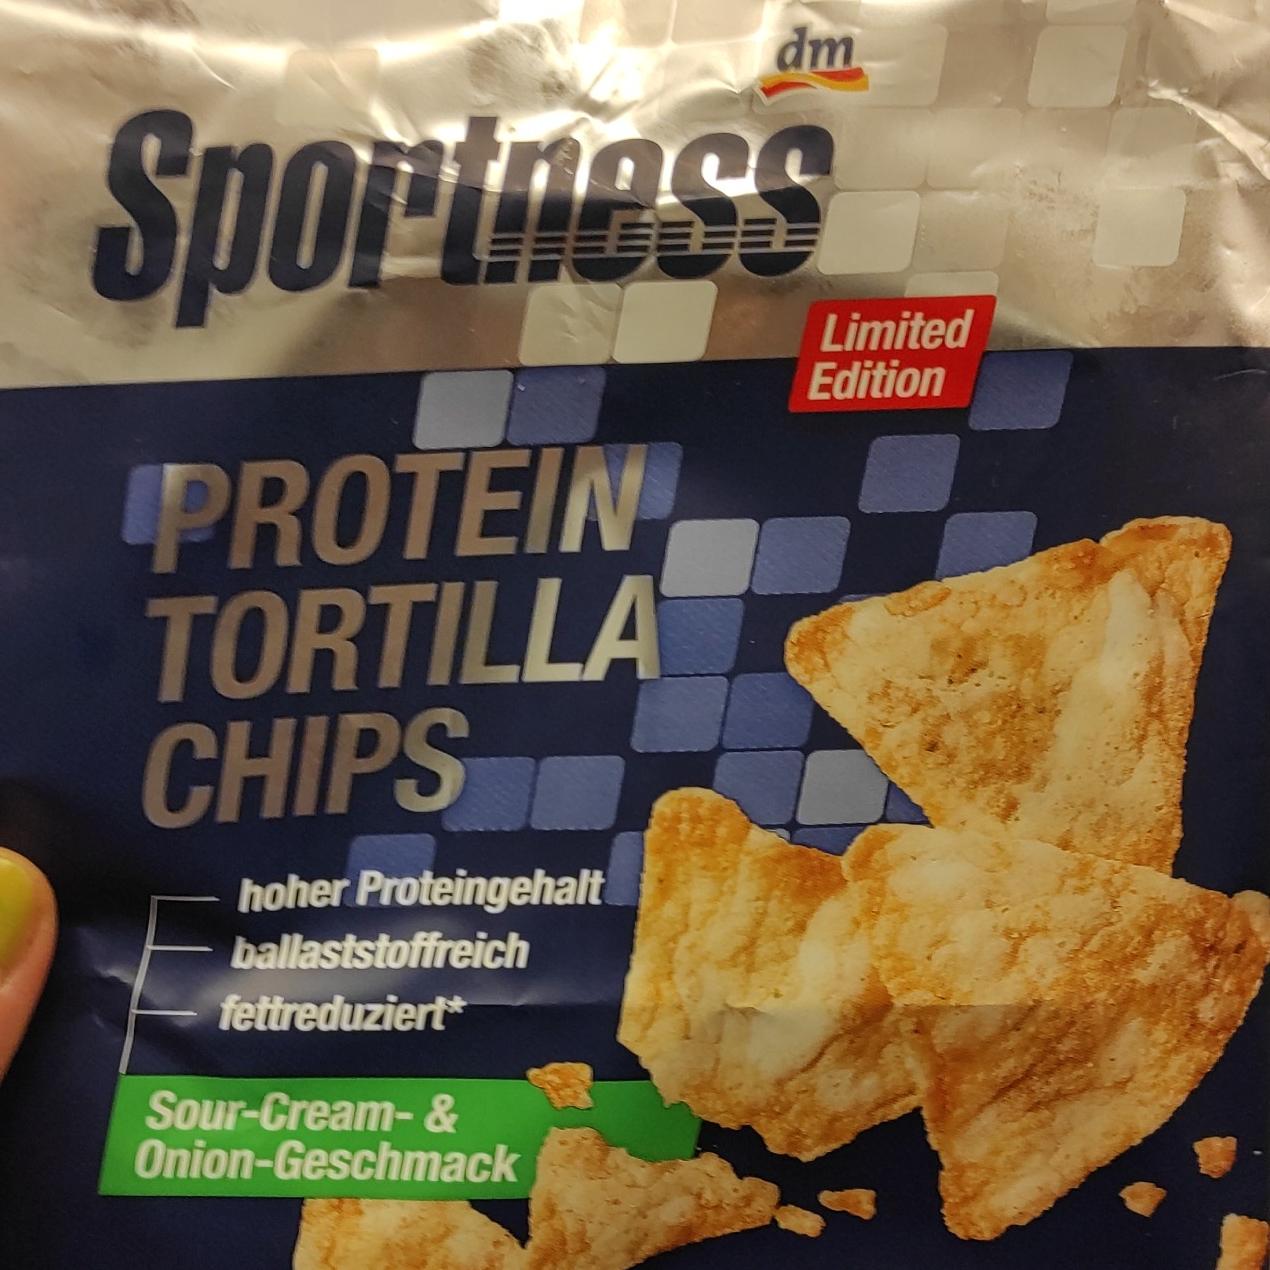 Fotografie - Protein tortilla chips Sour cream & Onion gechmack Sportness